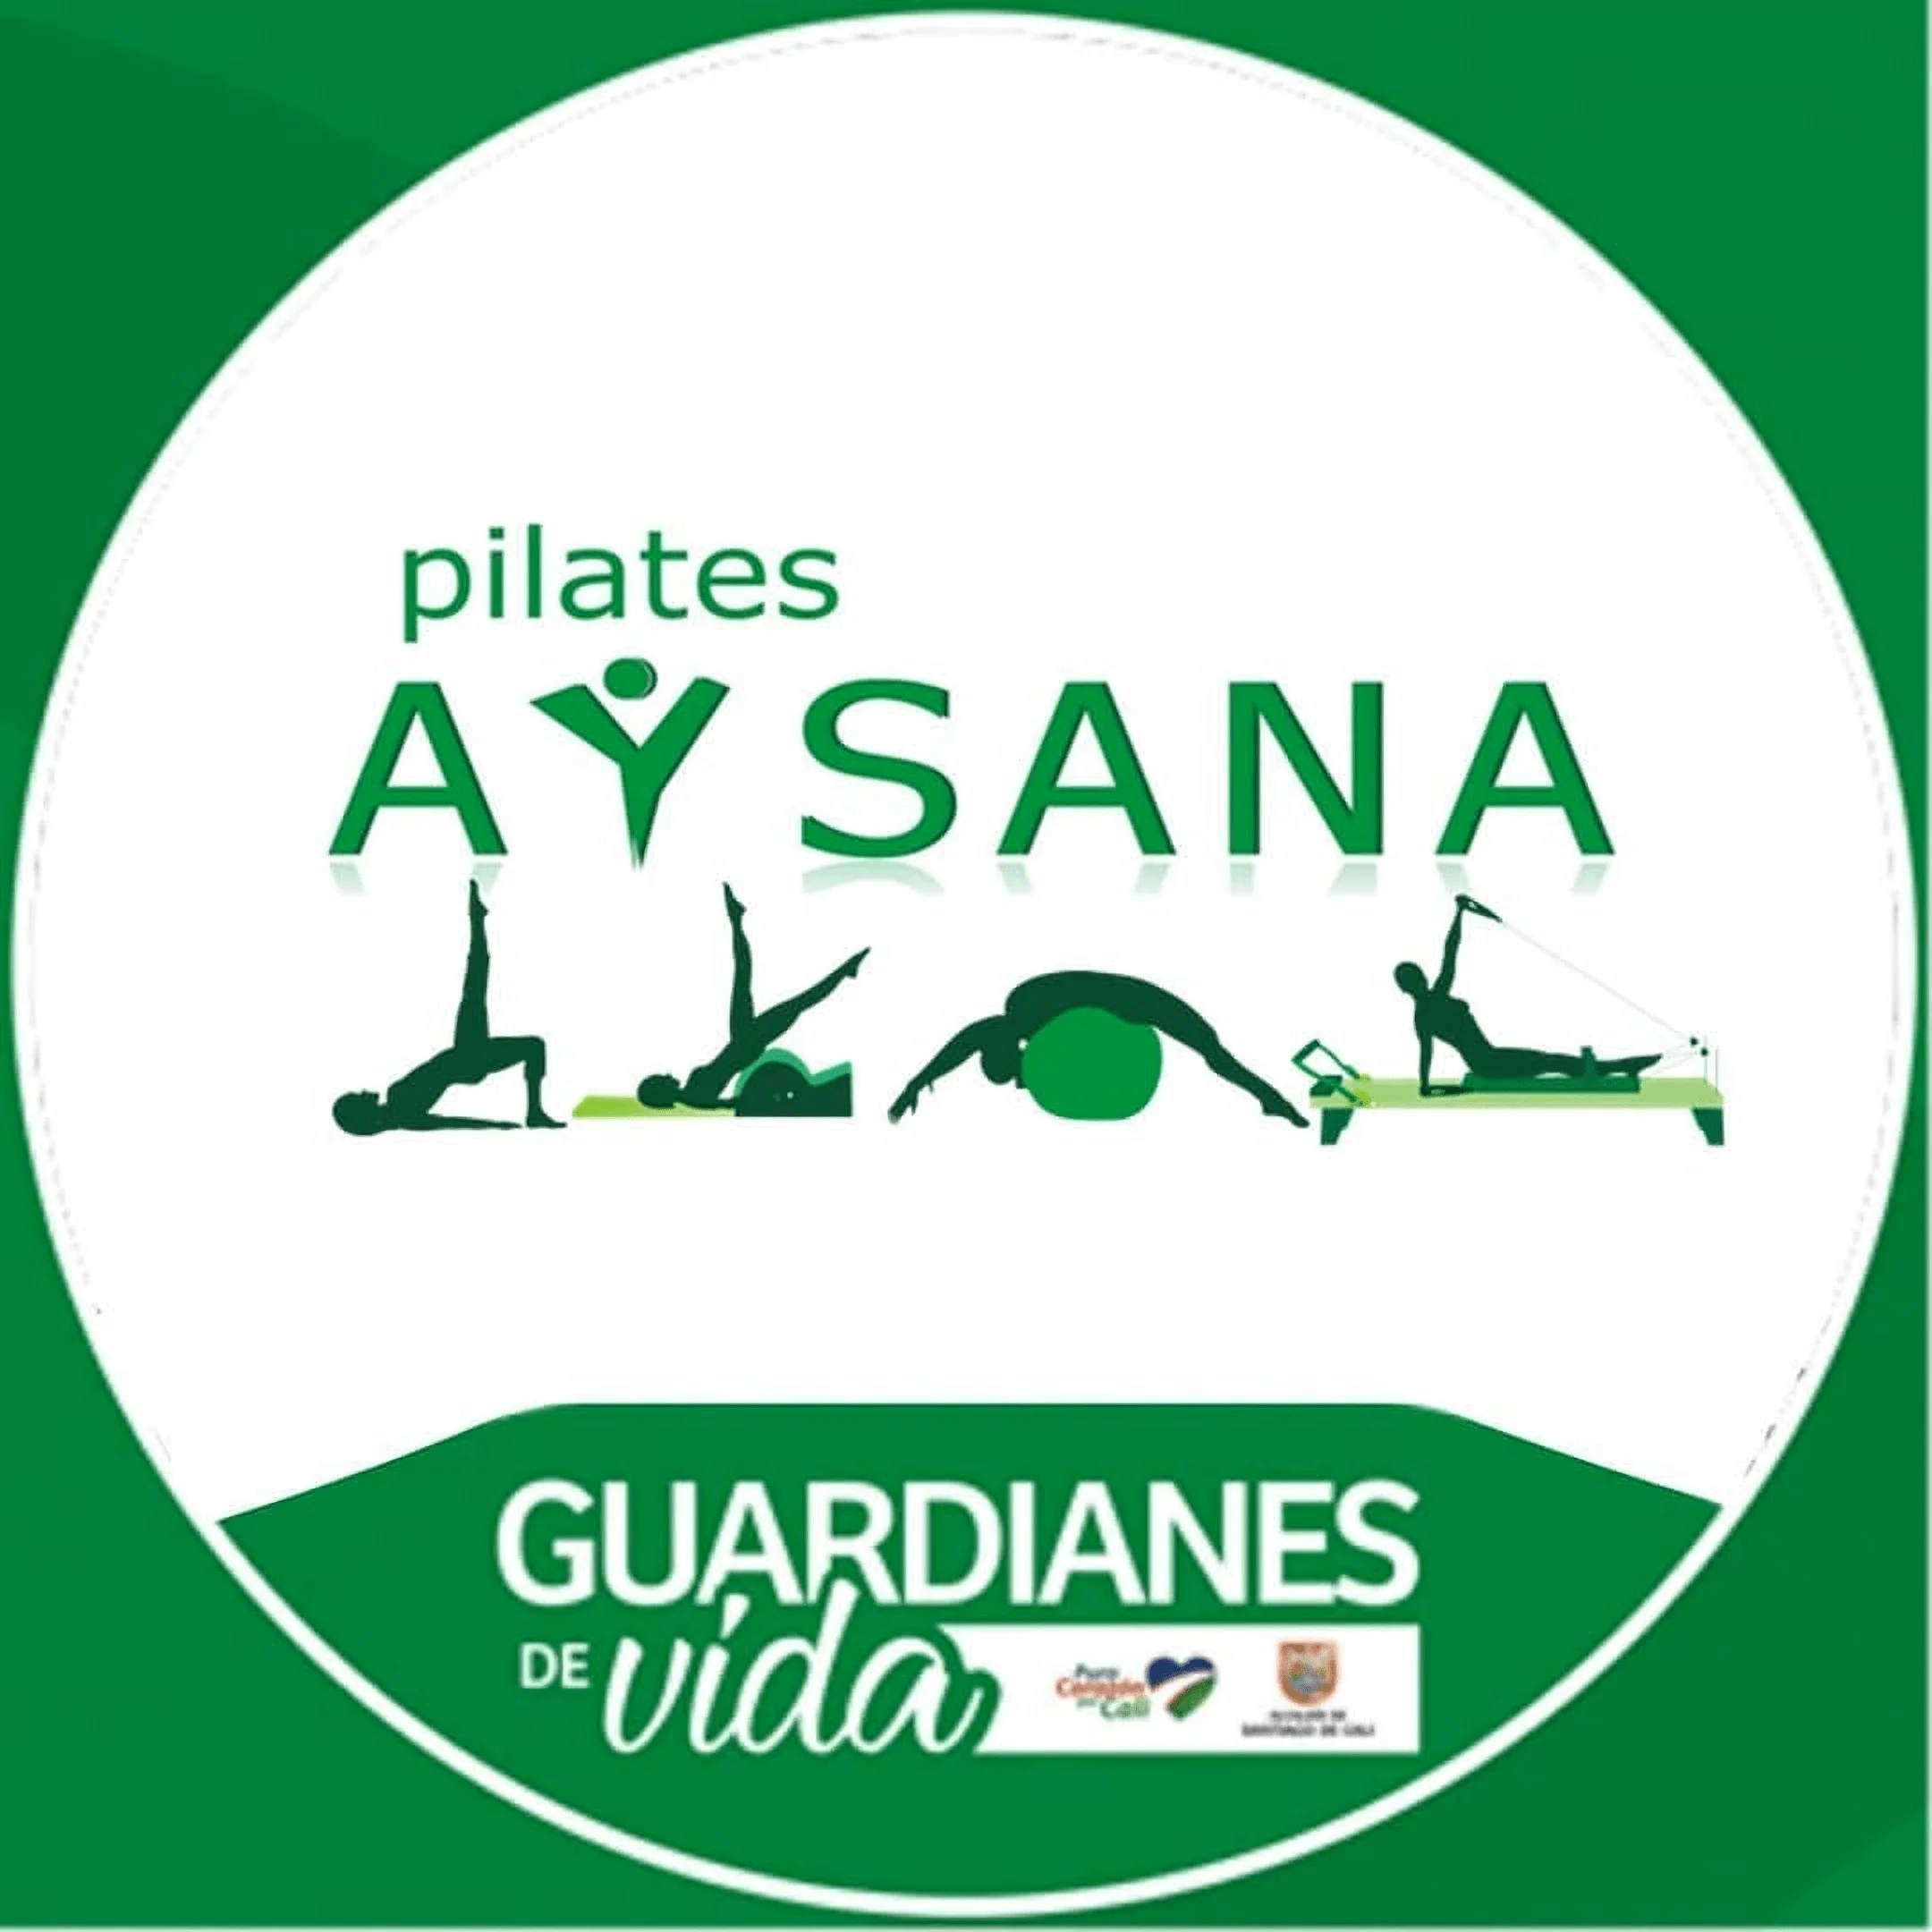 Pilates-pilates-aysana-7294